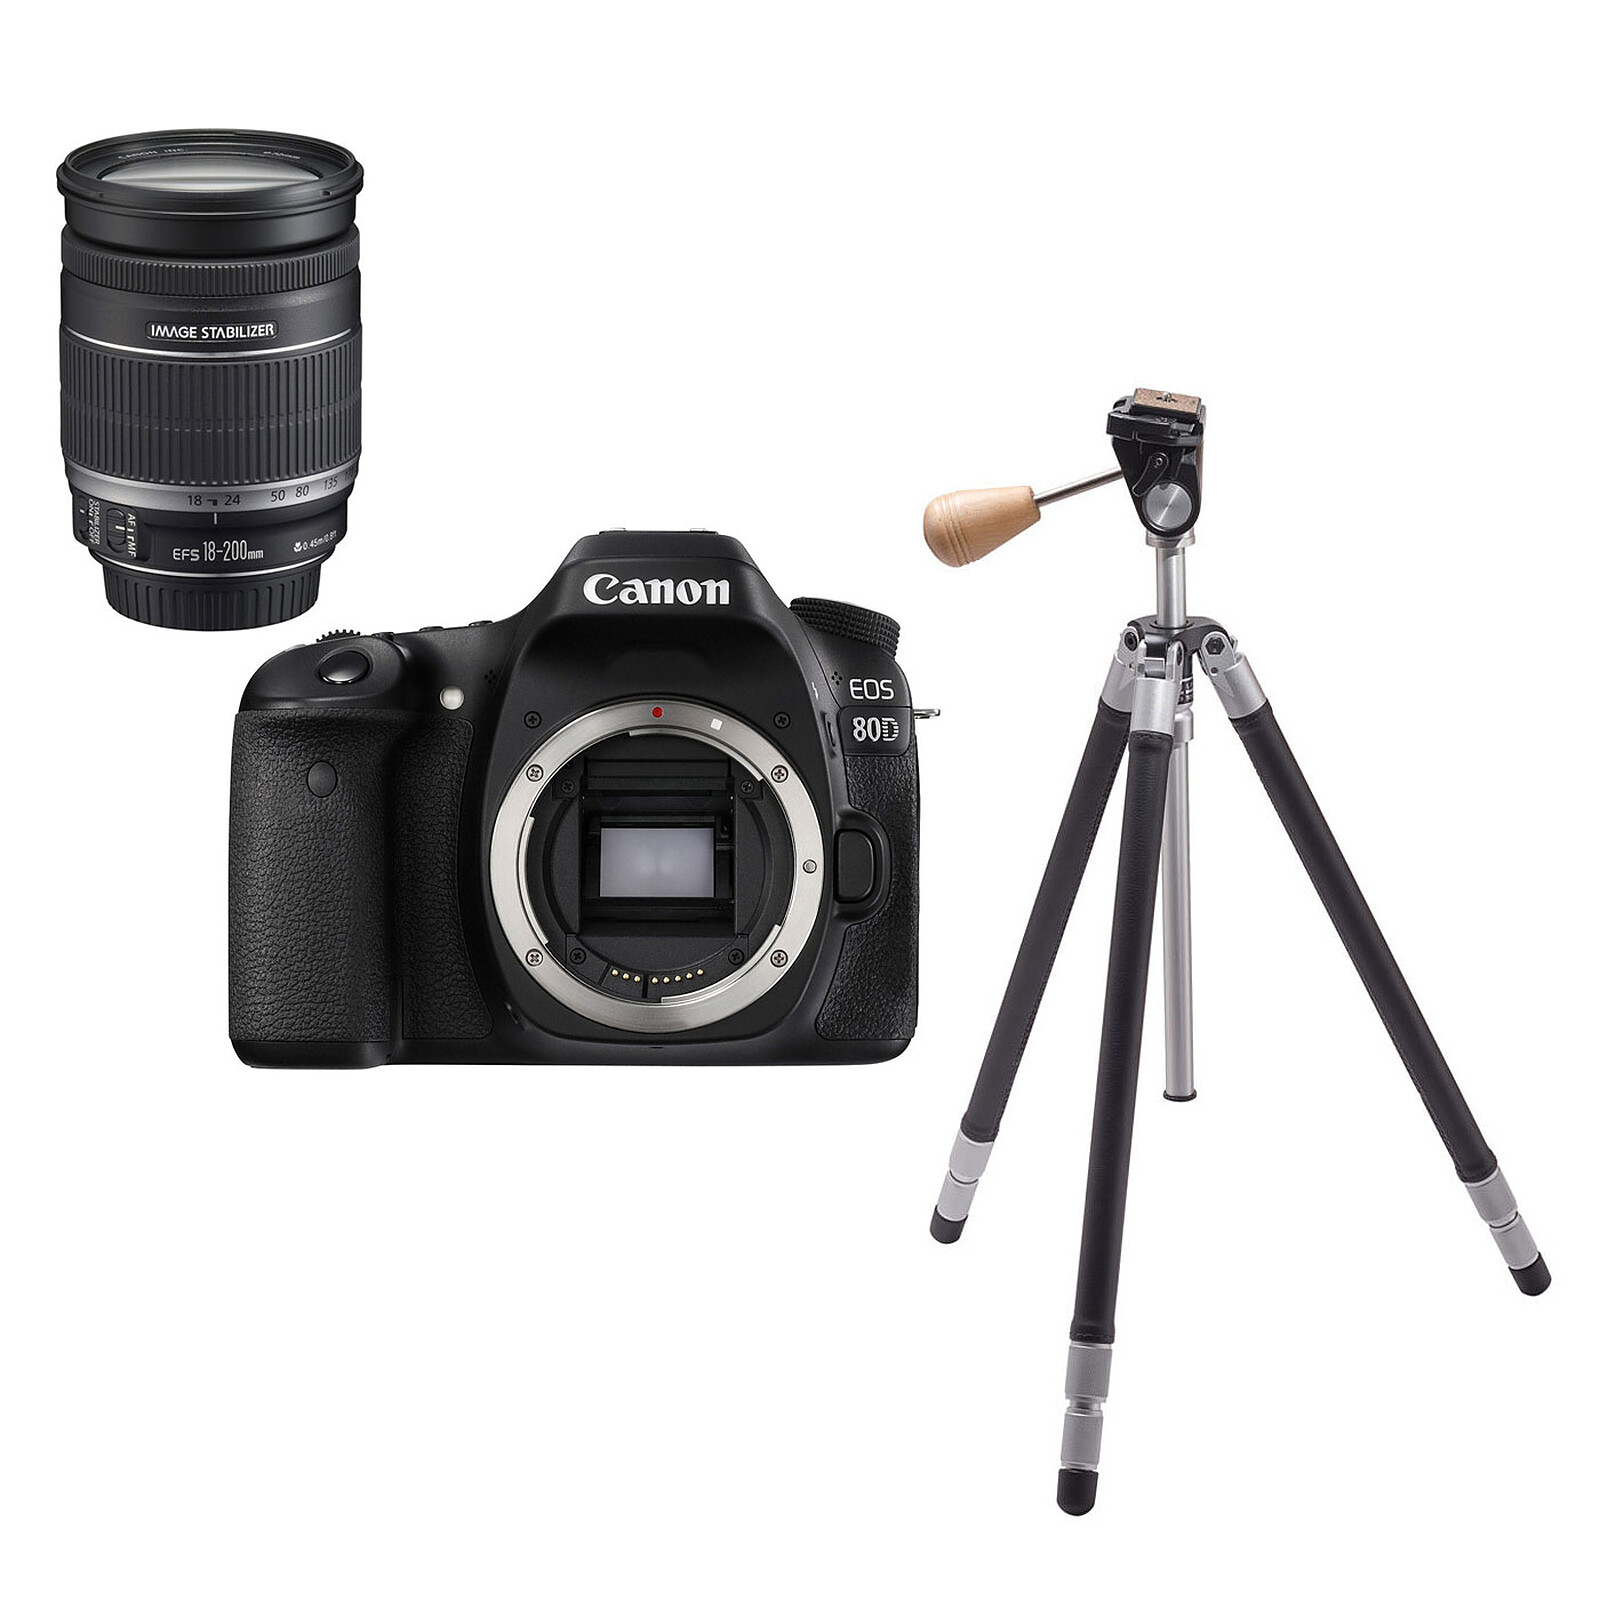 Canon EOS 80D + EF-S 18-200mm f/3.5-5.6 IS + Cokin T-RIV101 Riviera Classic